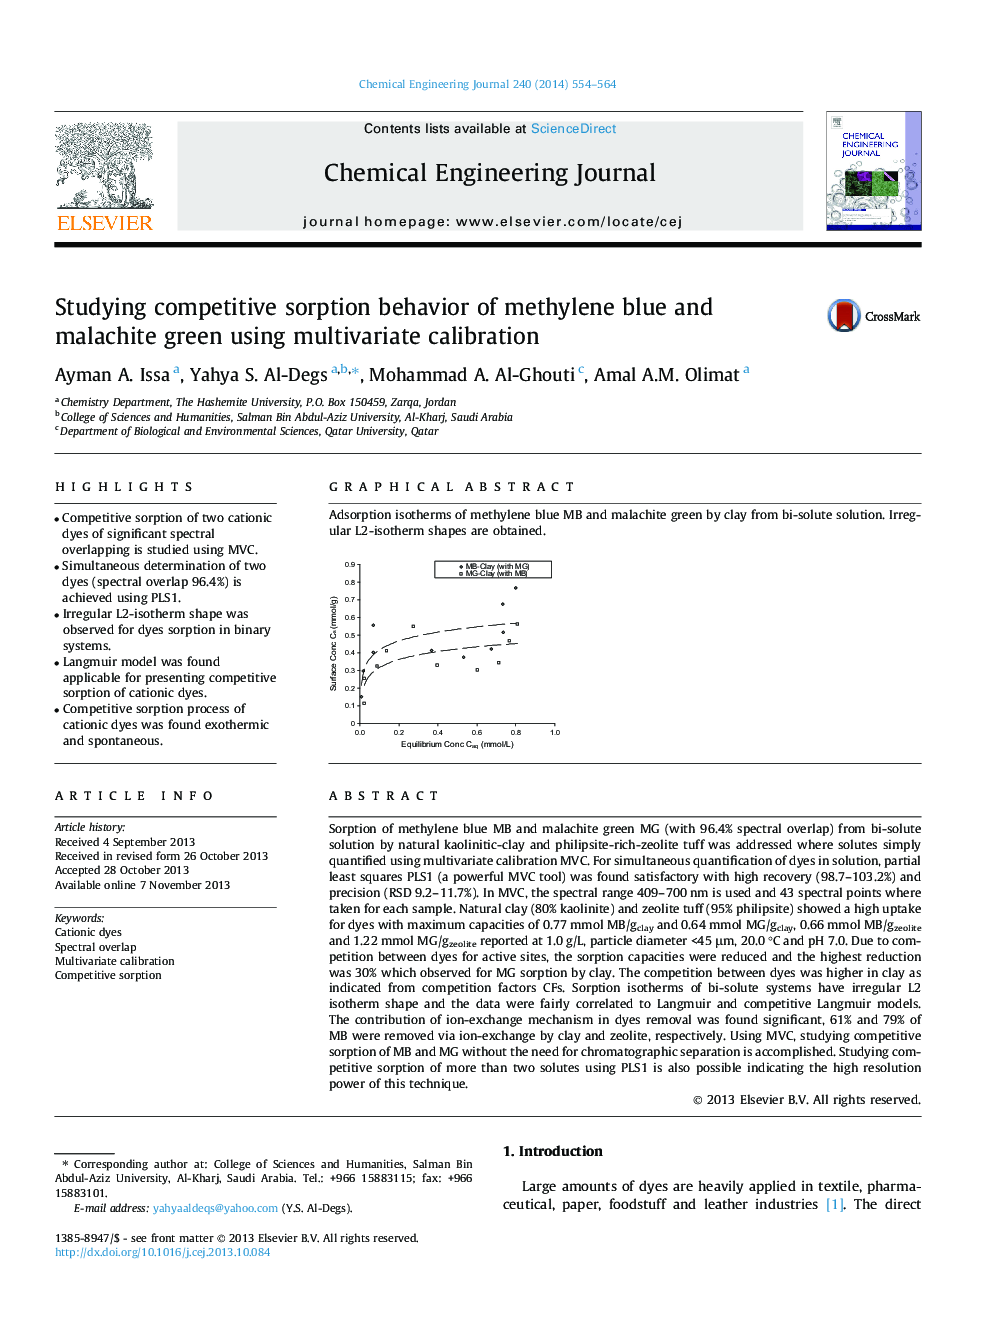 Studying competitive sorption behavior of methylene blue and malachite green using multivariate calibration